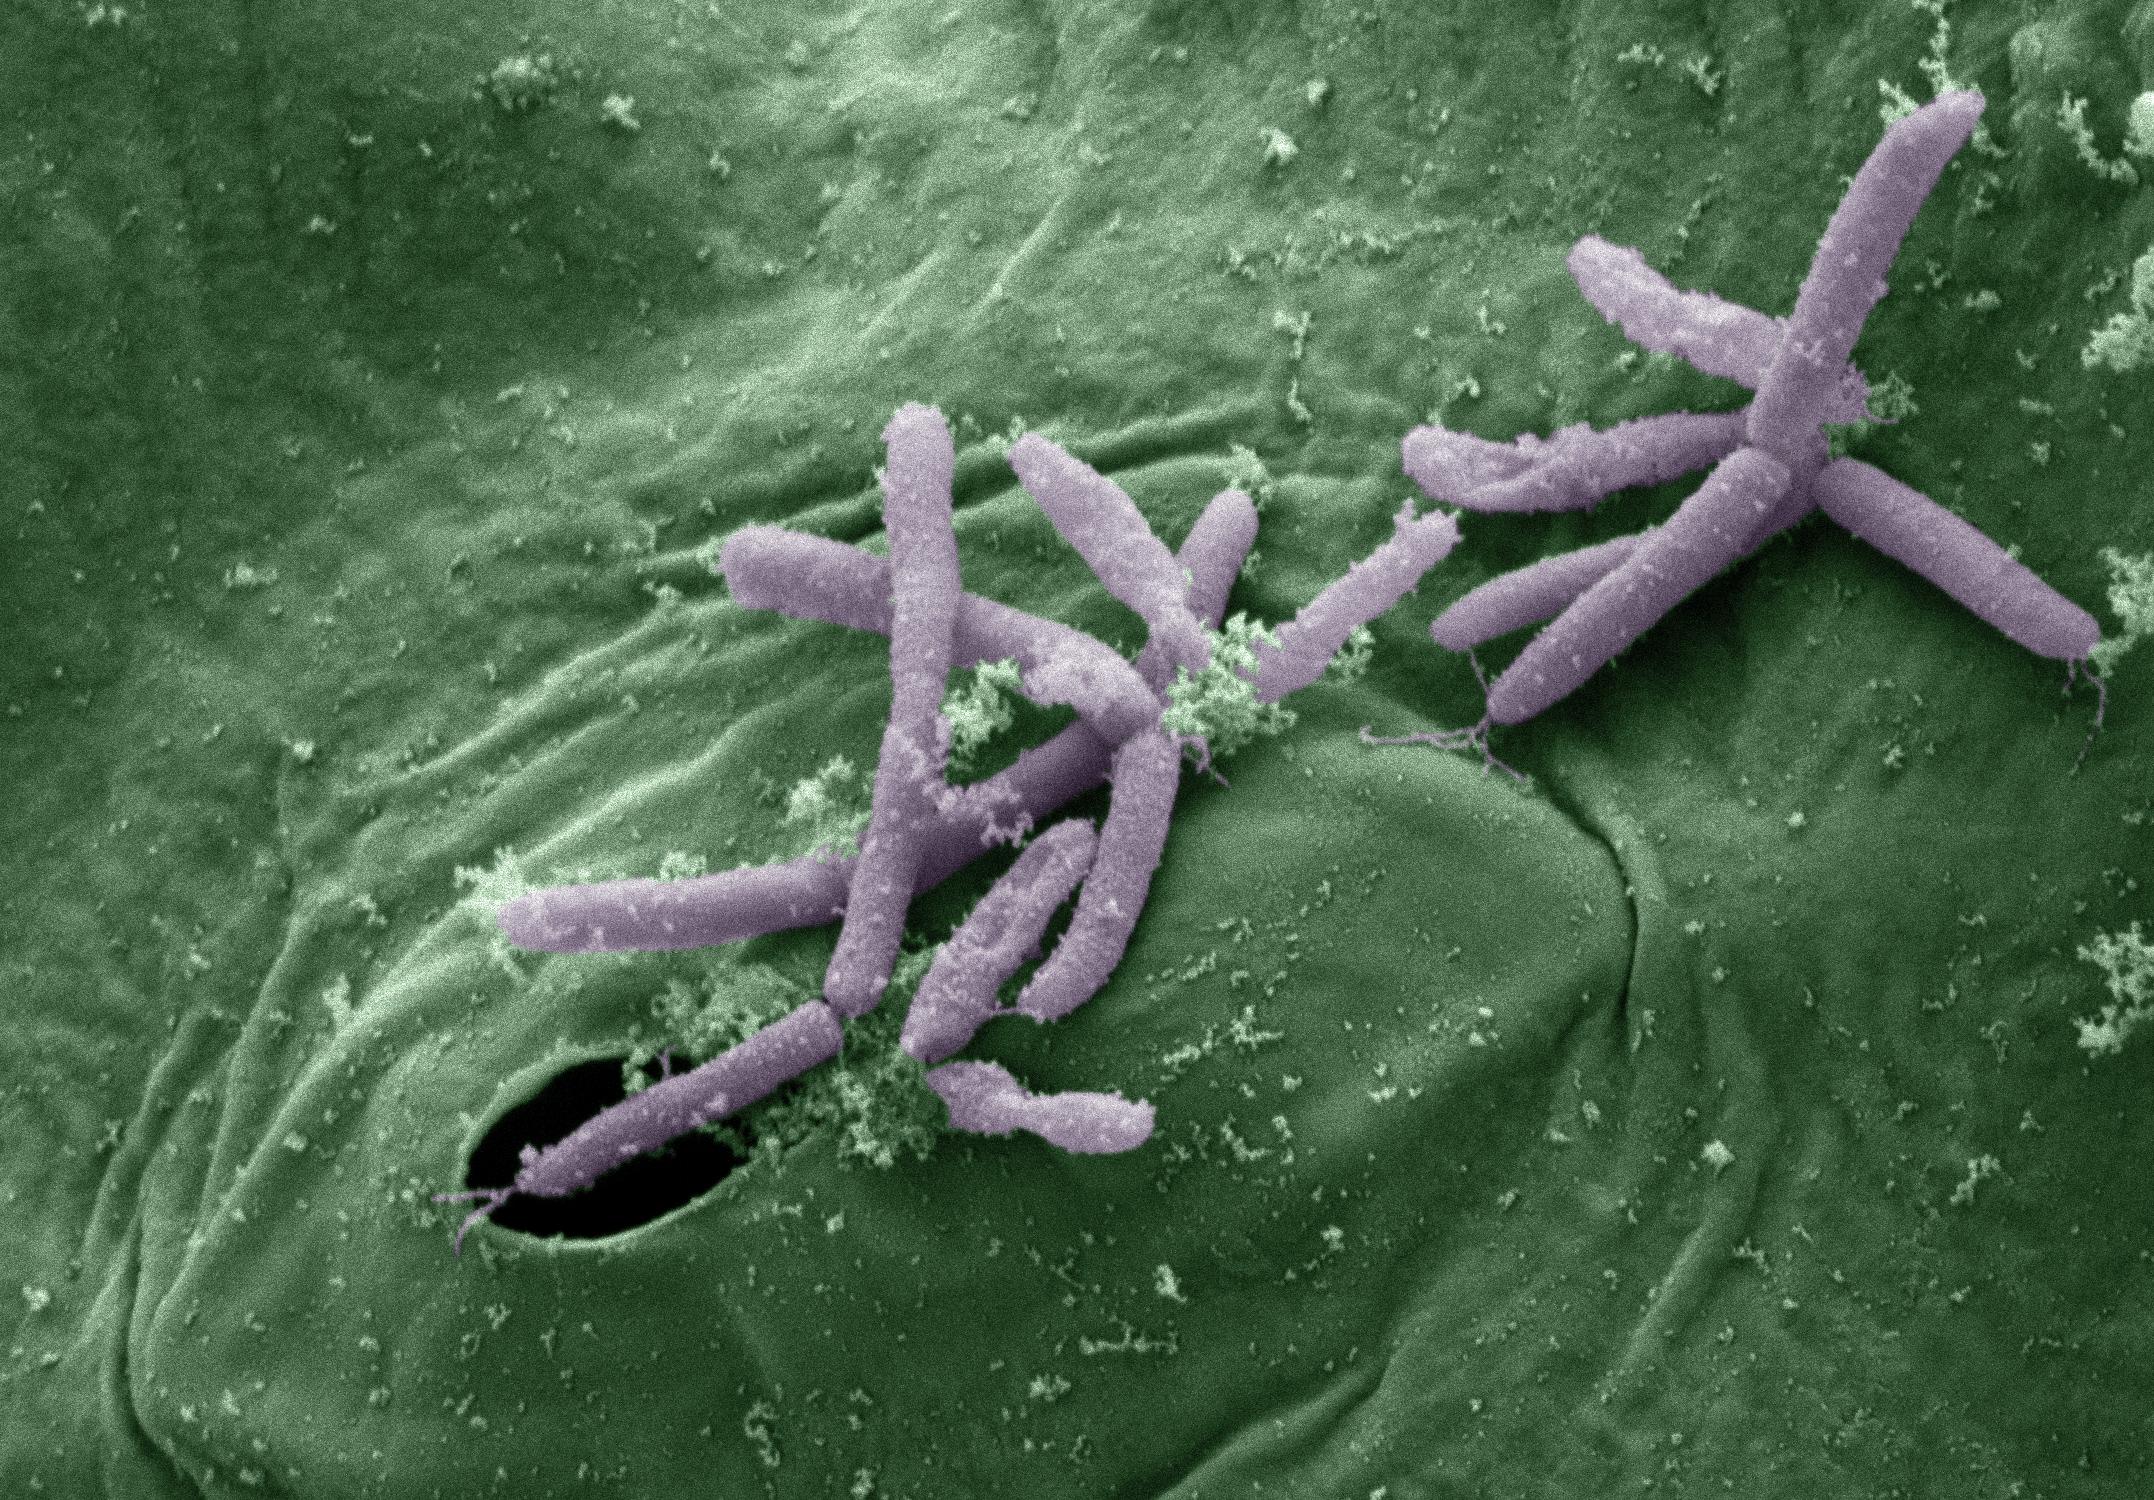 Биологи засняли заморозку воды под действием бактерий Pseudomonas syringae